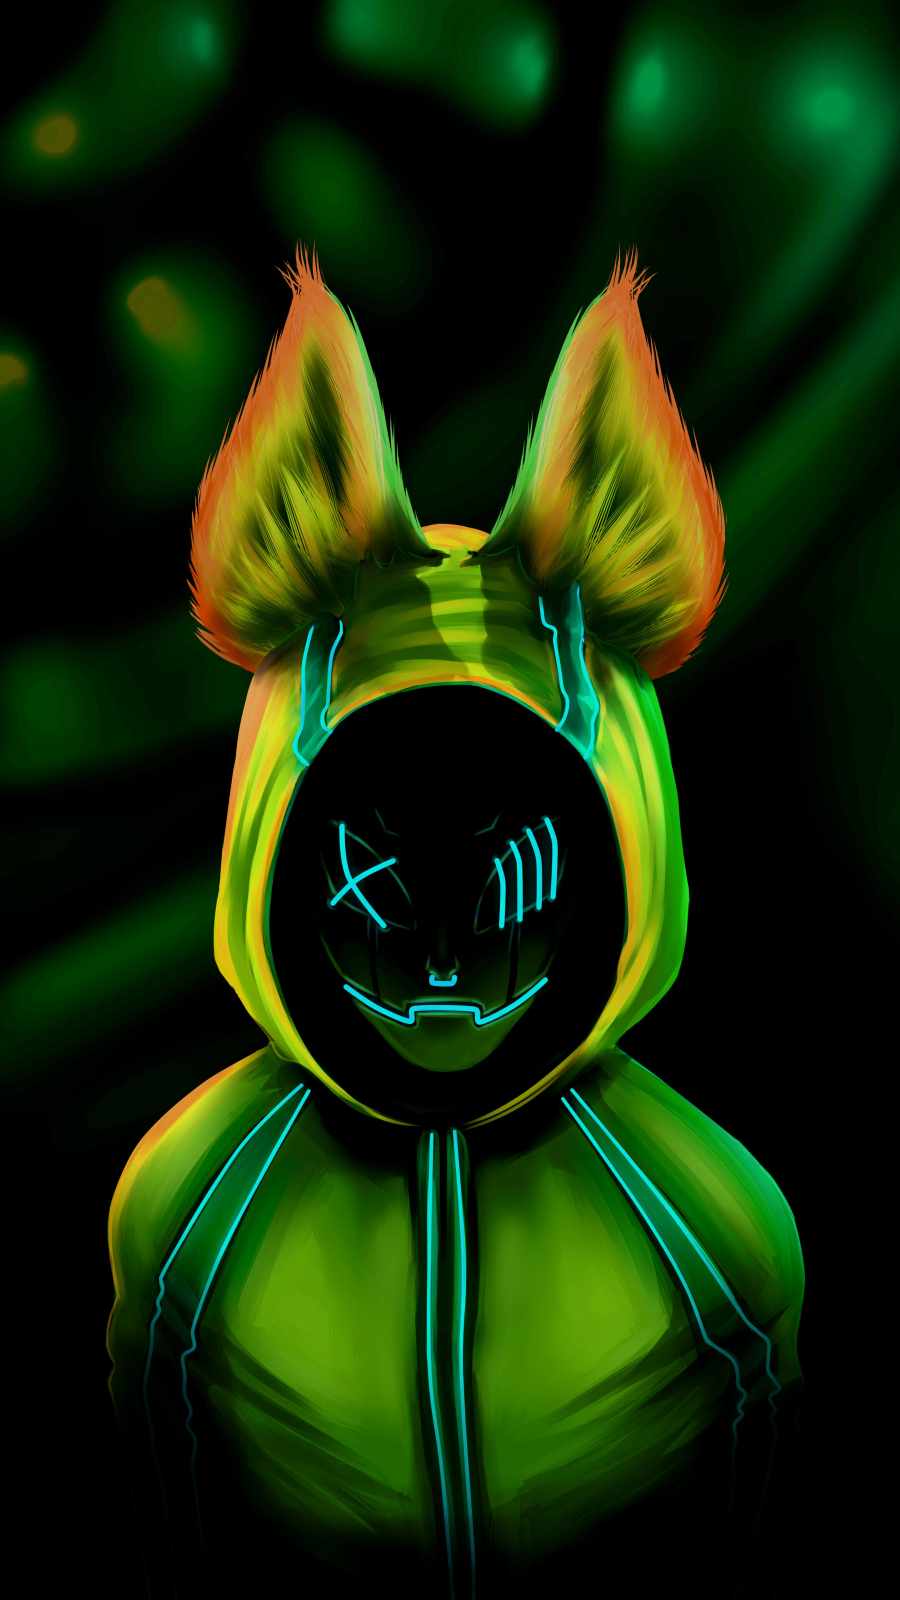 Rabbit Face iPhone Wallpaper